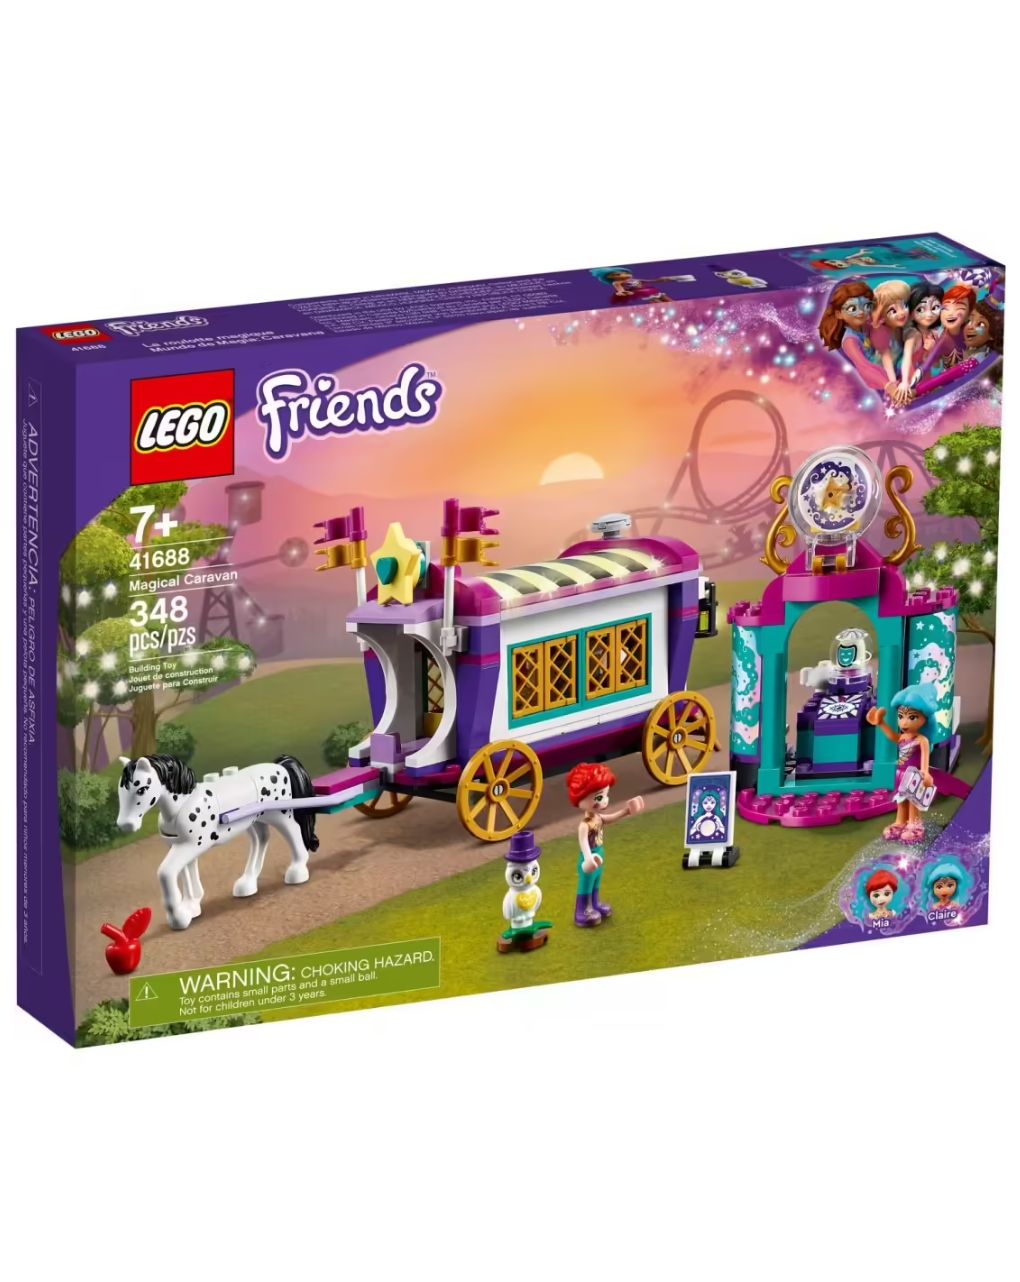 Lego friends μαγικό τροχόσπιτο  41688